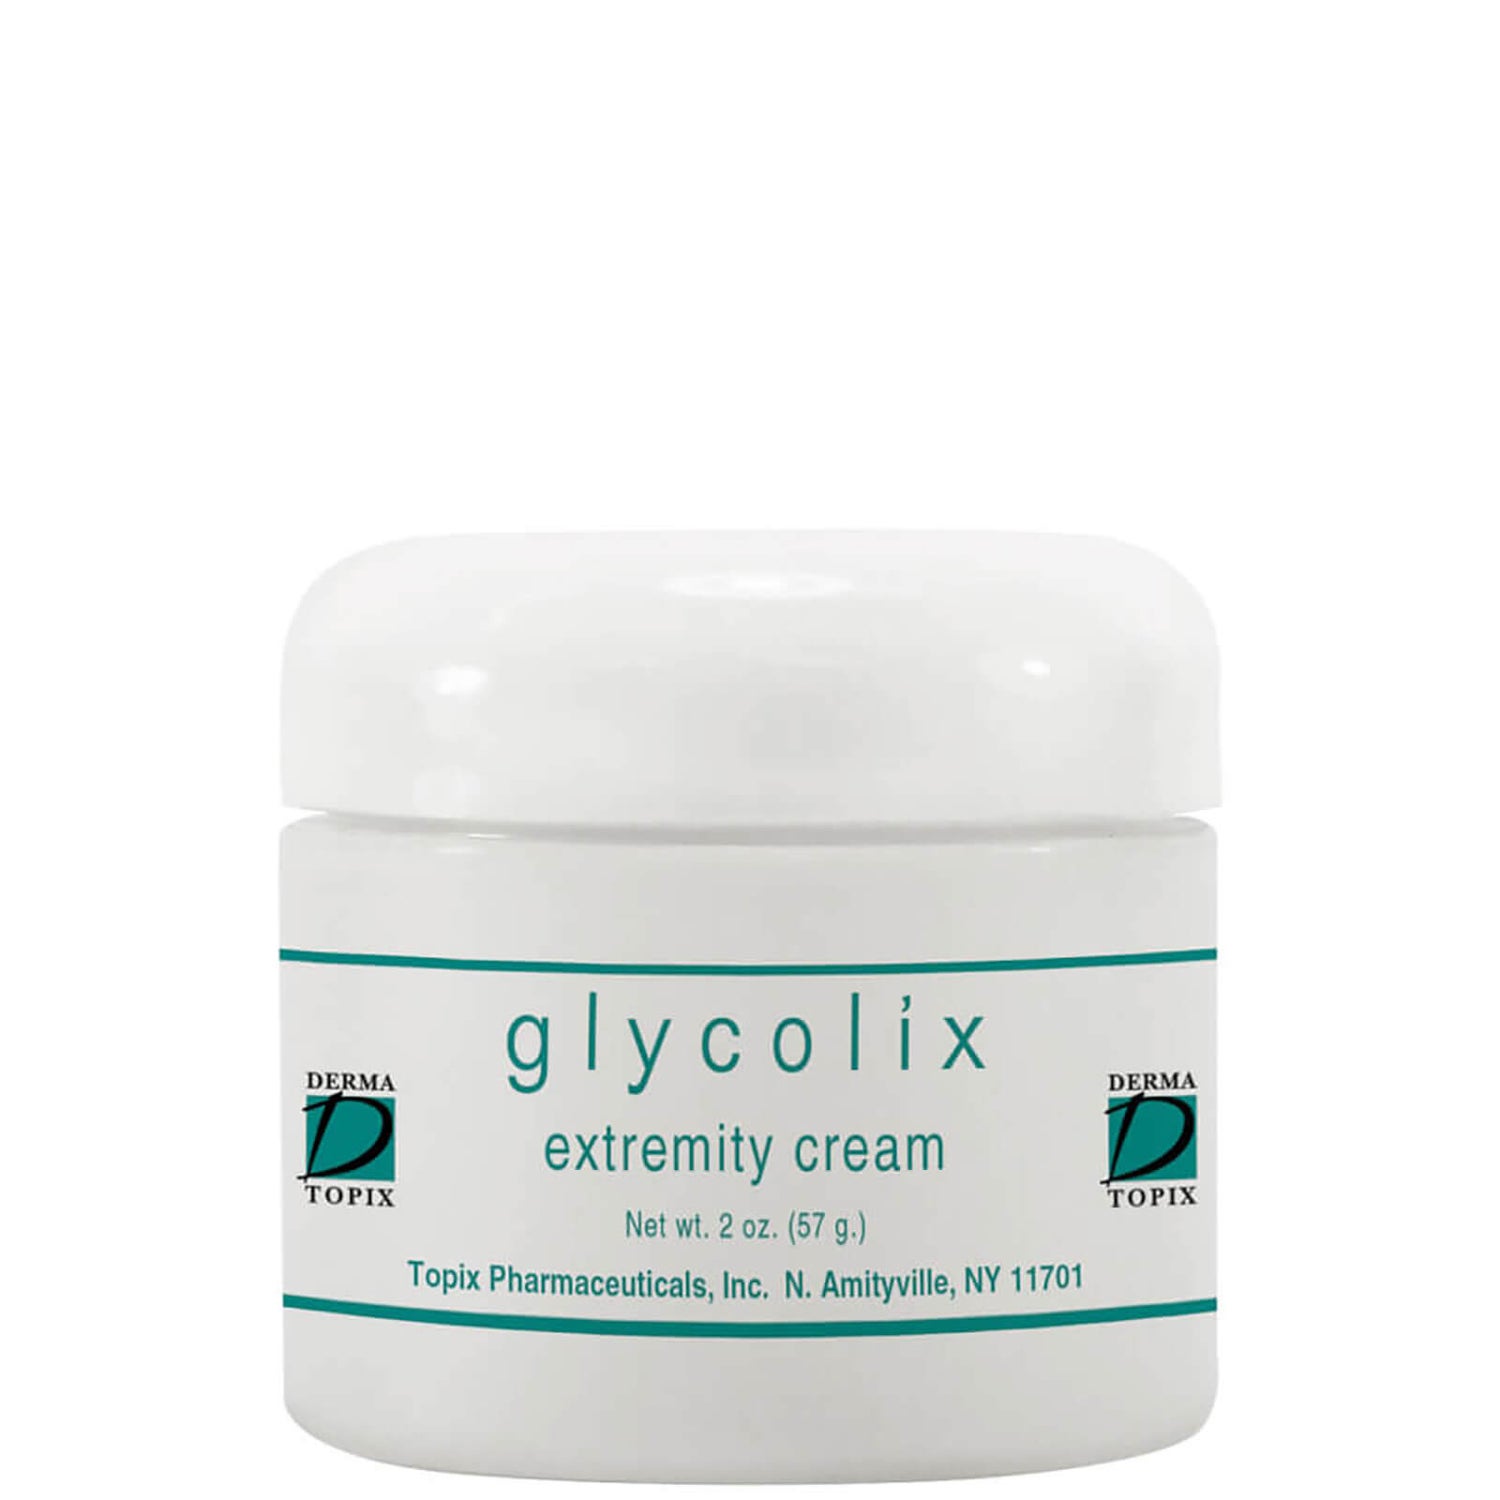 Glycolix Extremity Cream